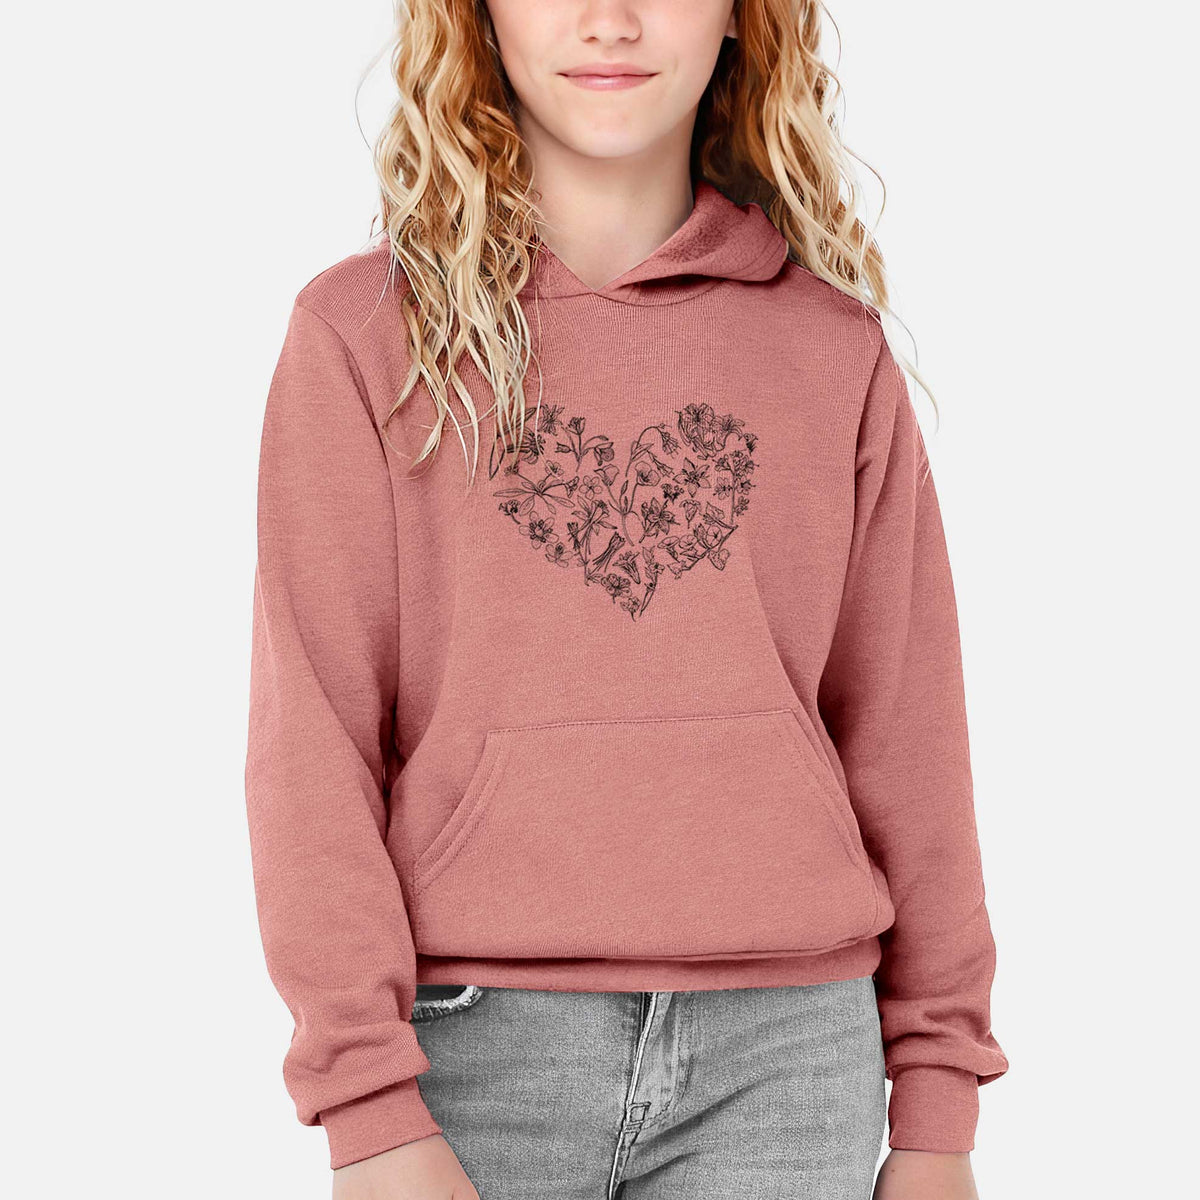 Heart Full of California Mountain Wildflowers - Youth Hoodie Sweatshirt